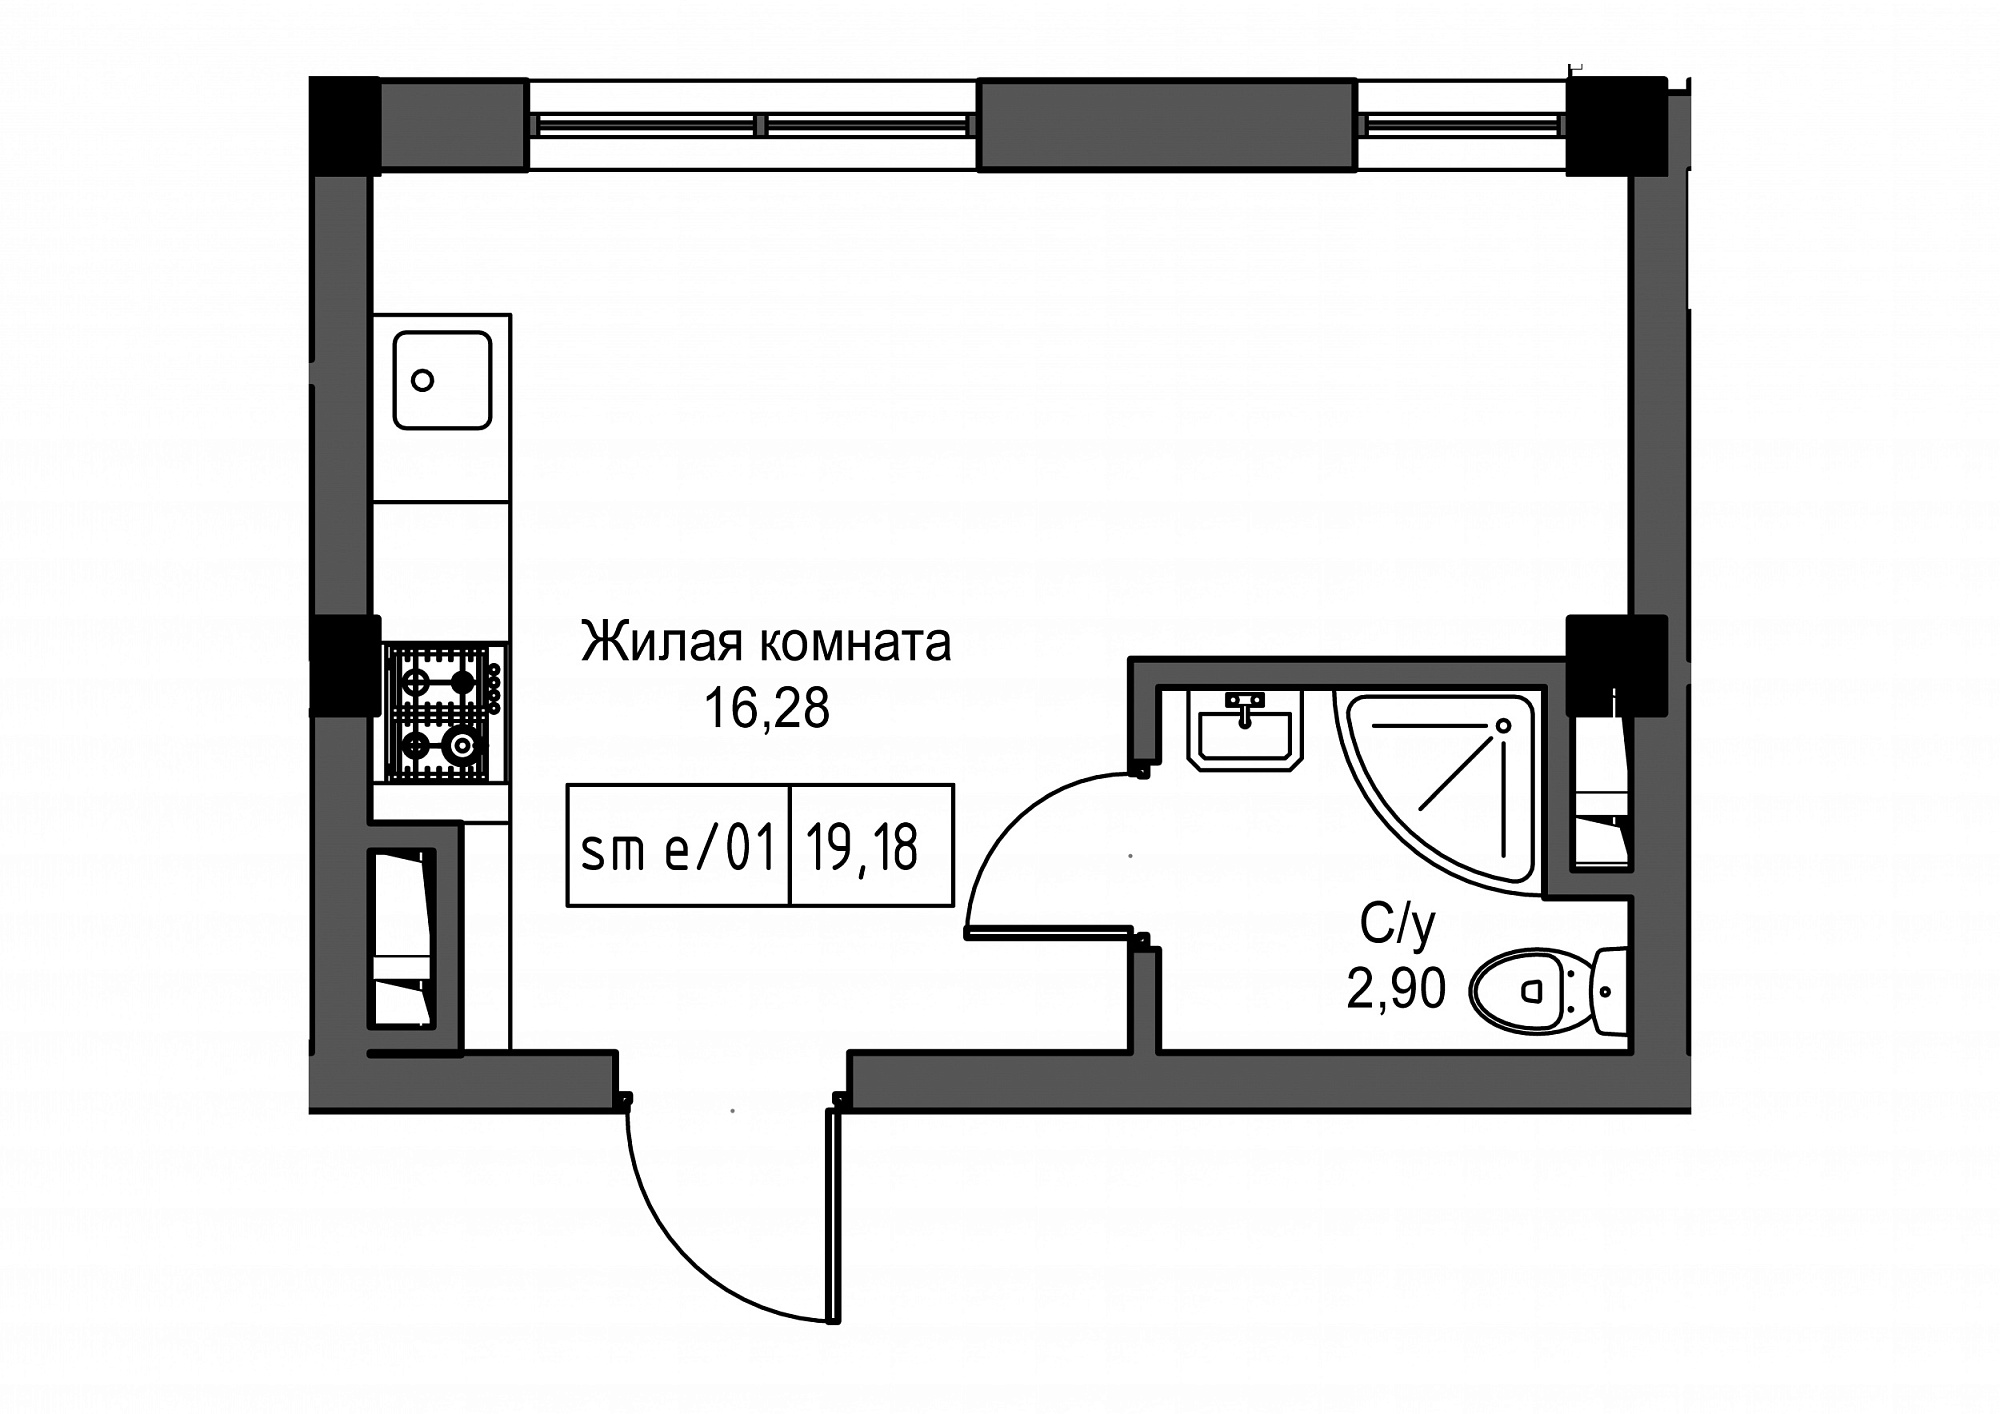 Планування Smart-квартира площею 19.18м2, UM-002-02/0101.